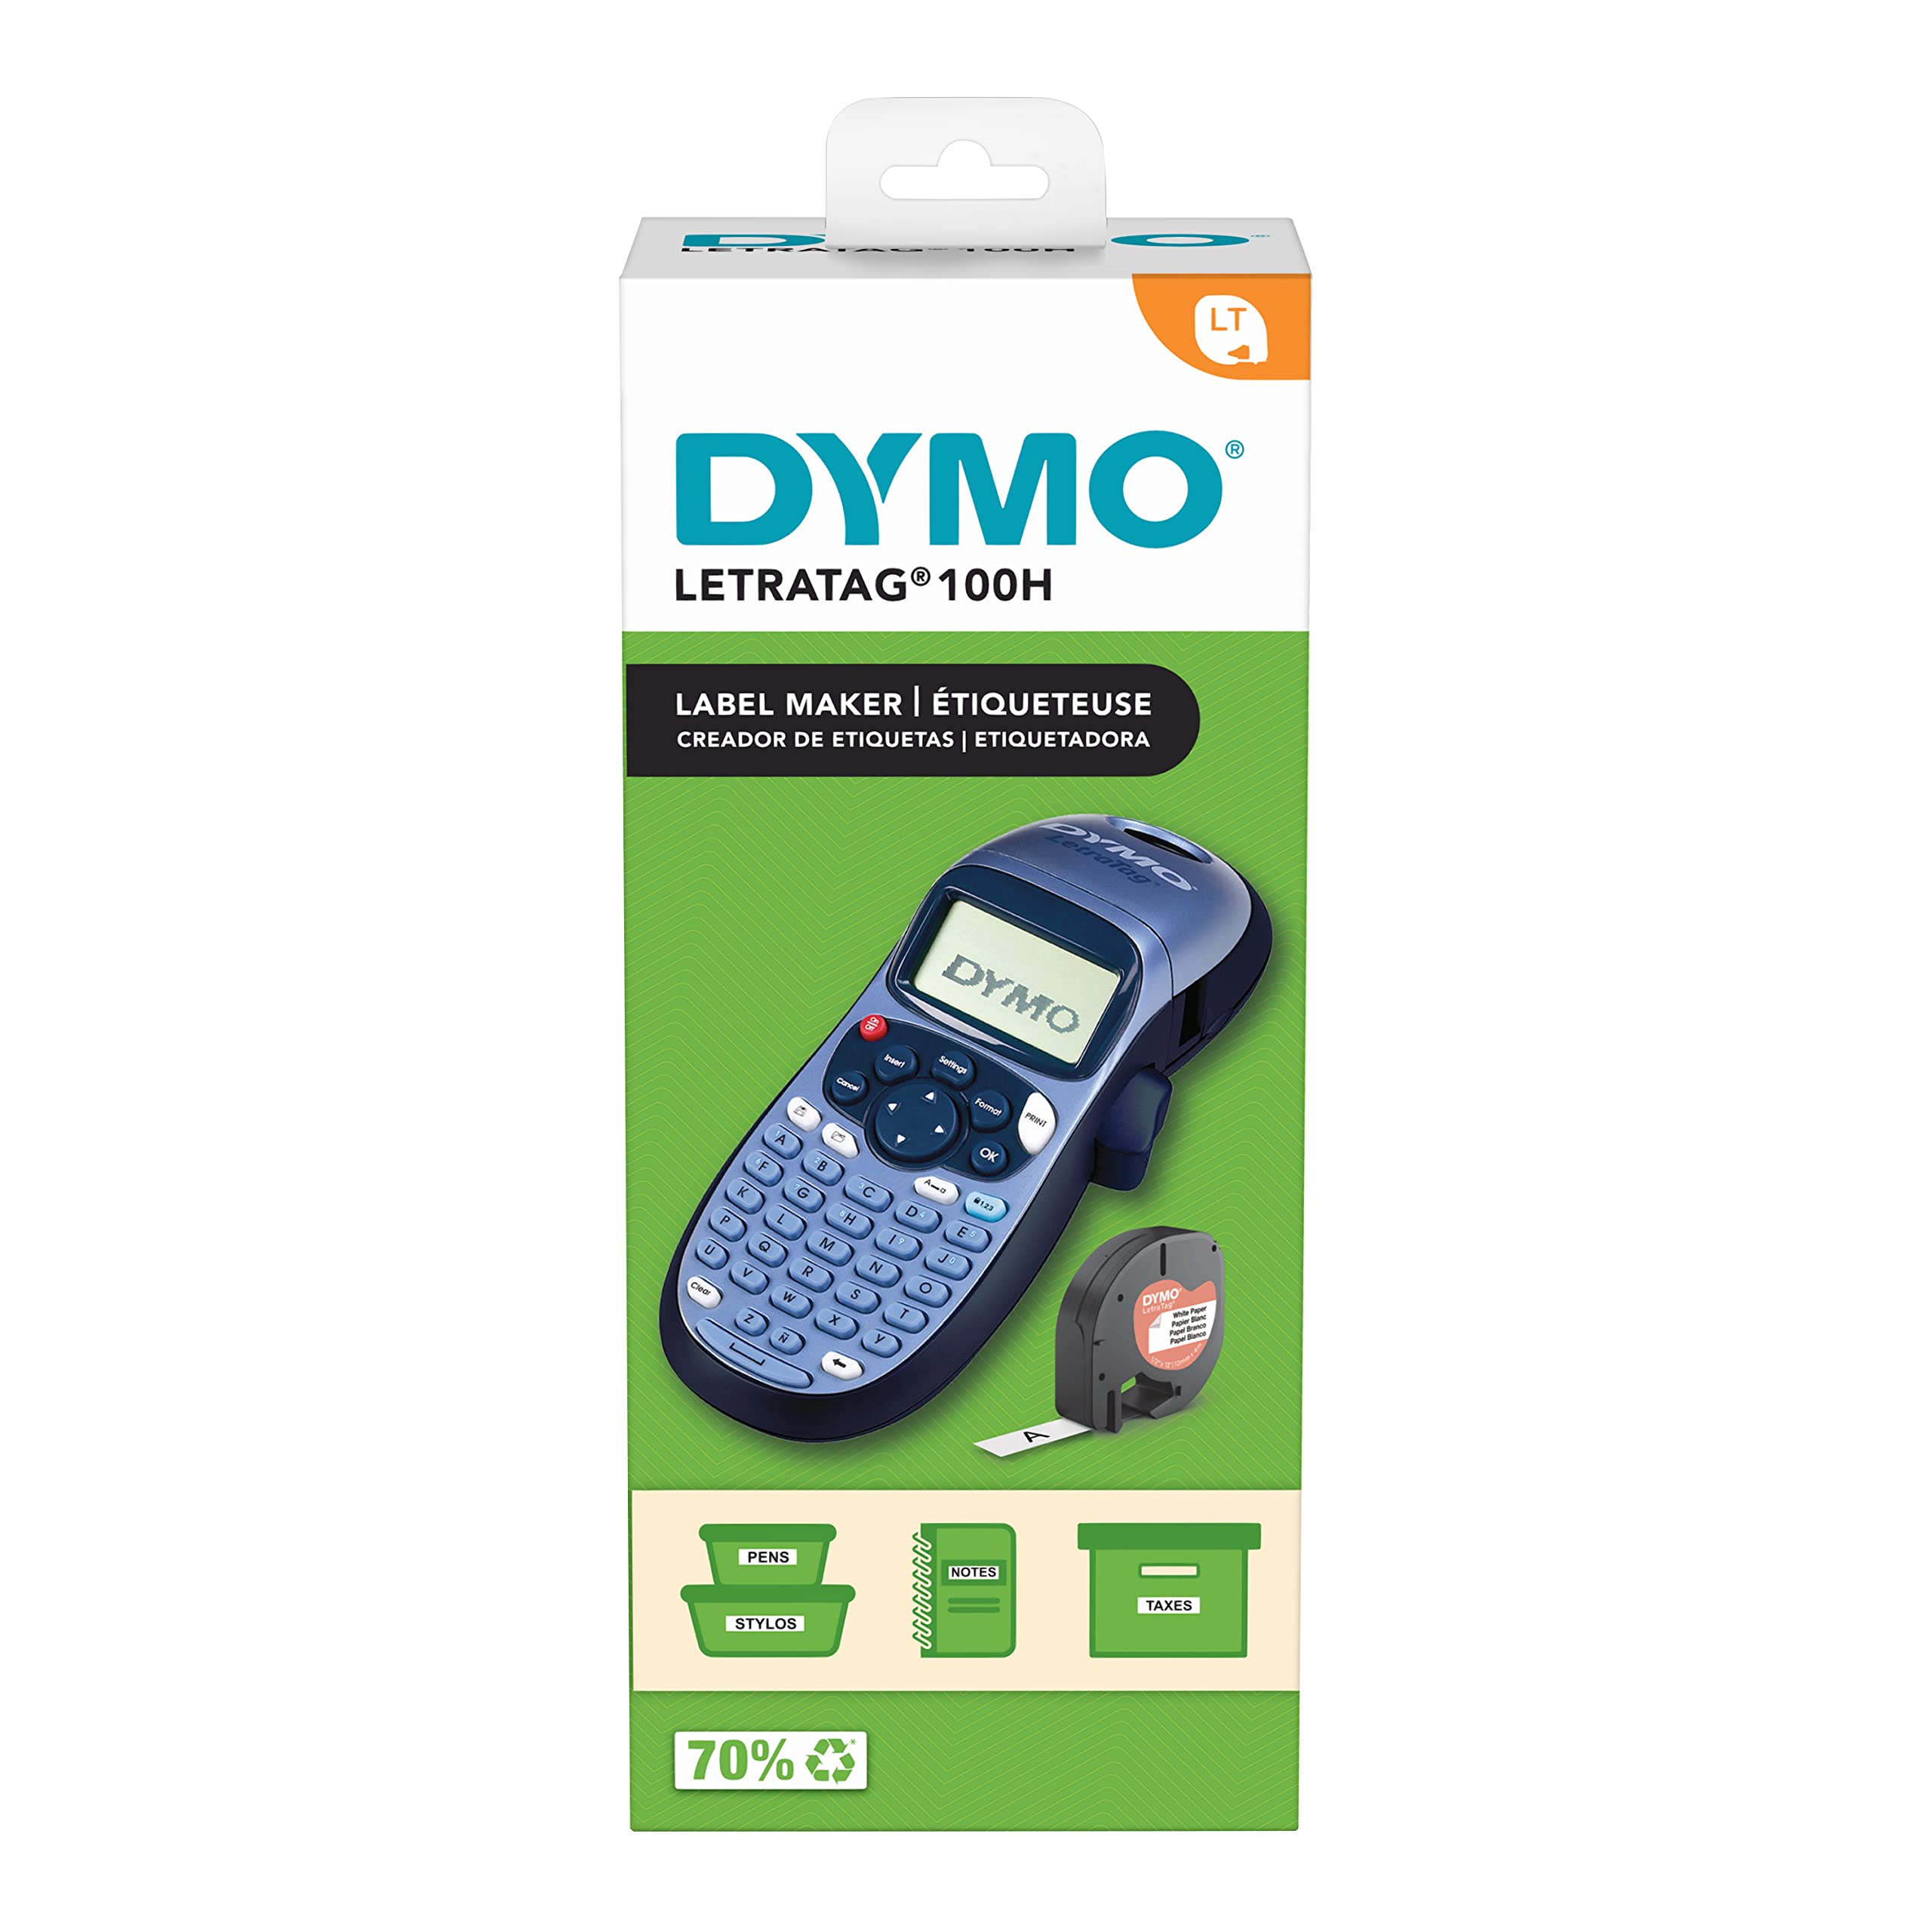 Etichettatrice Dymo Letratag portatile lt 100h